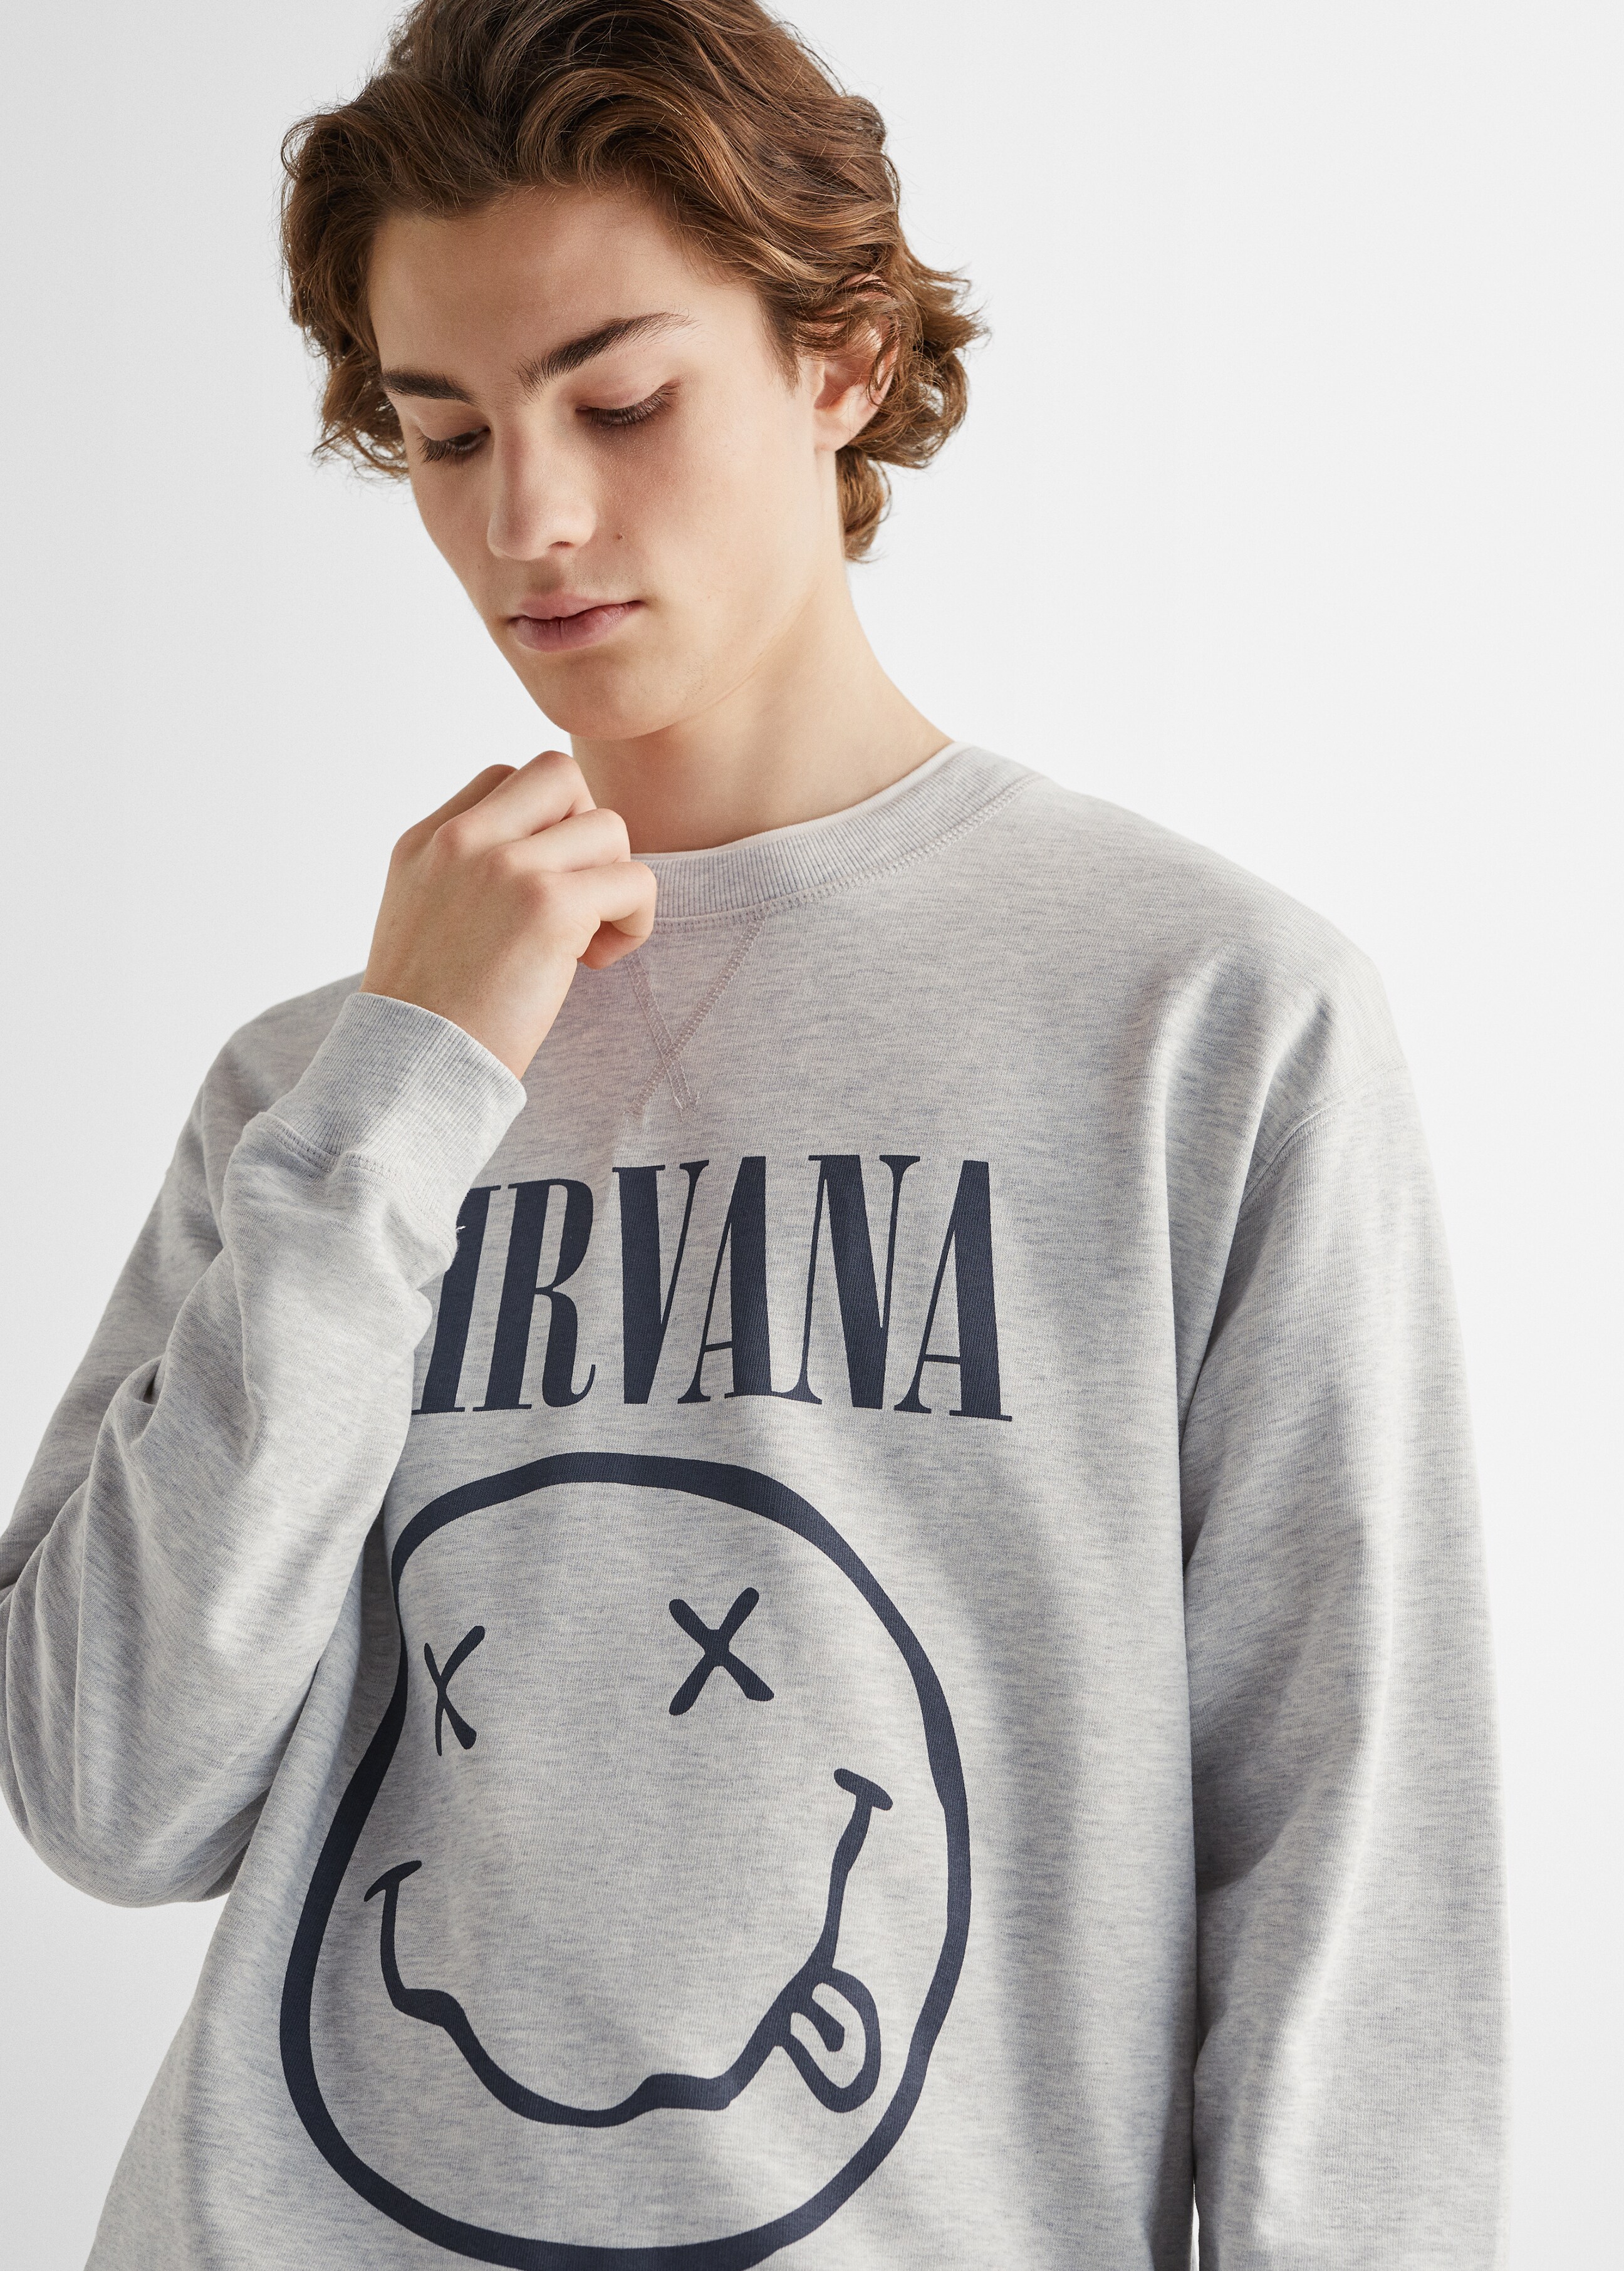 Sweatshirt Nirvana - Detail des Artikels 1